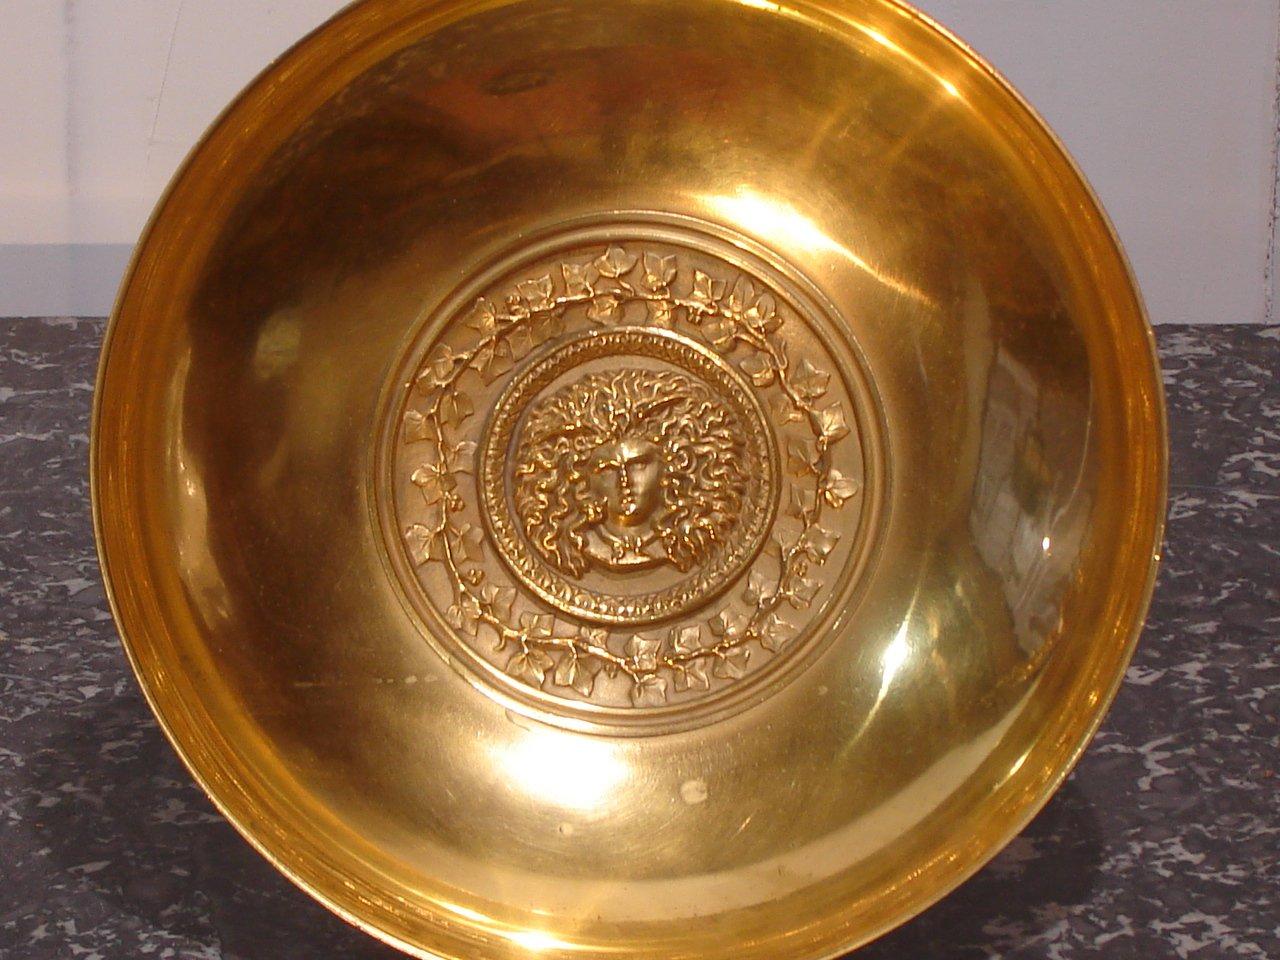 French Medusa Head Golden Bronze Centrepiece Fruit Bowl Empire Period, France